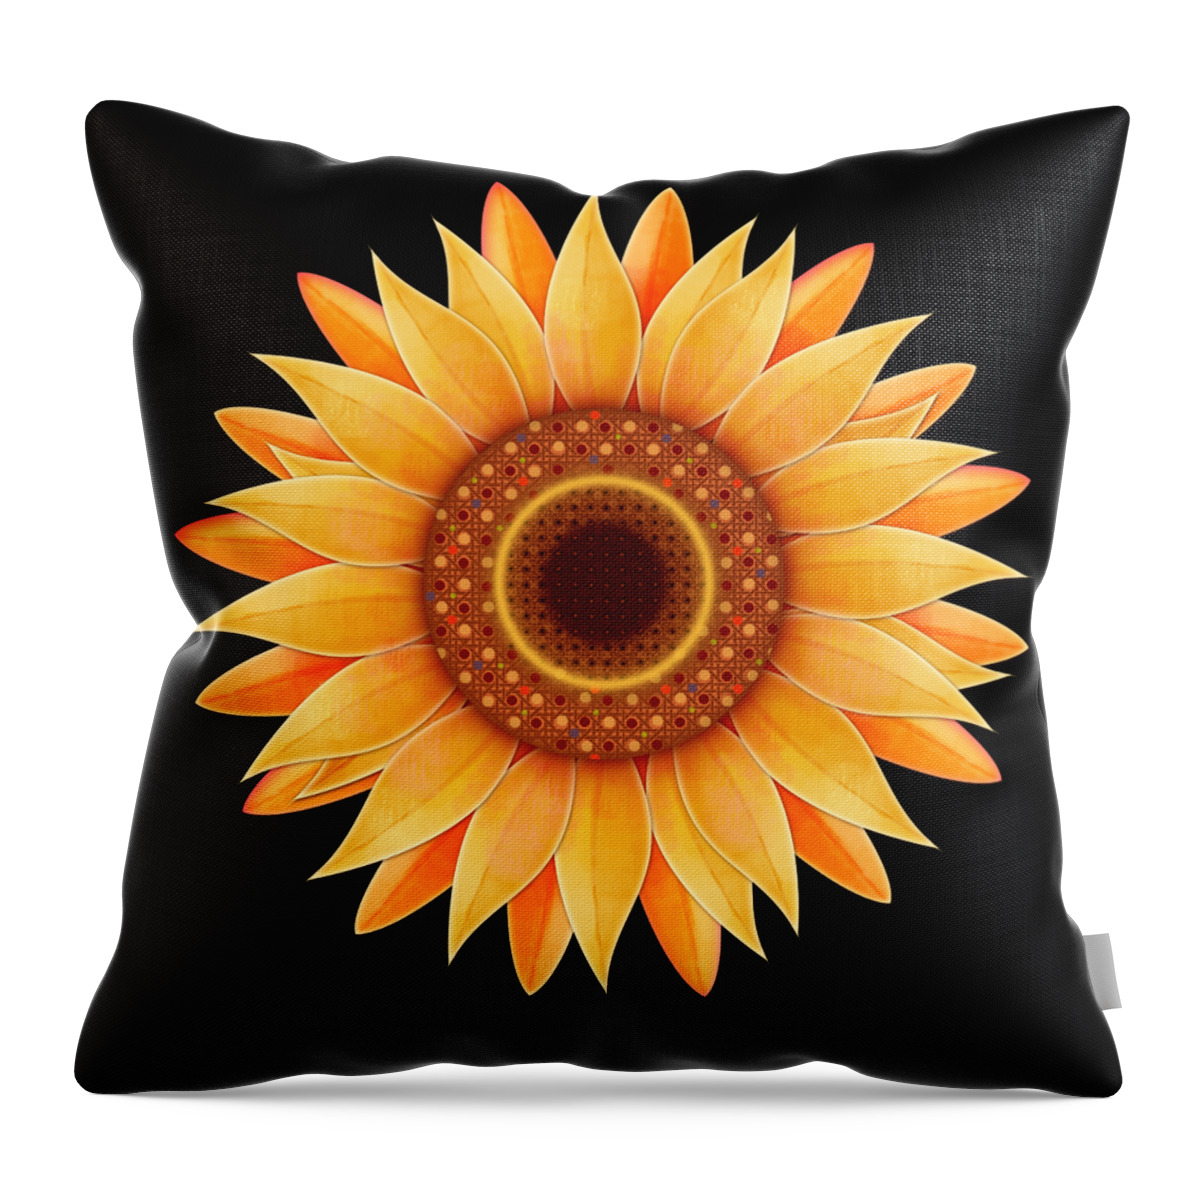 Sunflower Throw Pillow featuring the digital art Sunflower Promise by Valerie Drake Lesiak